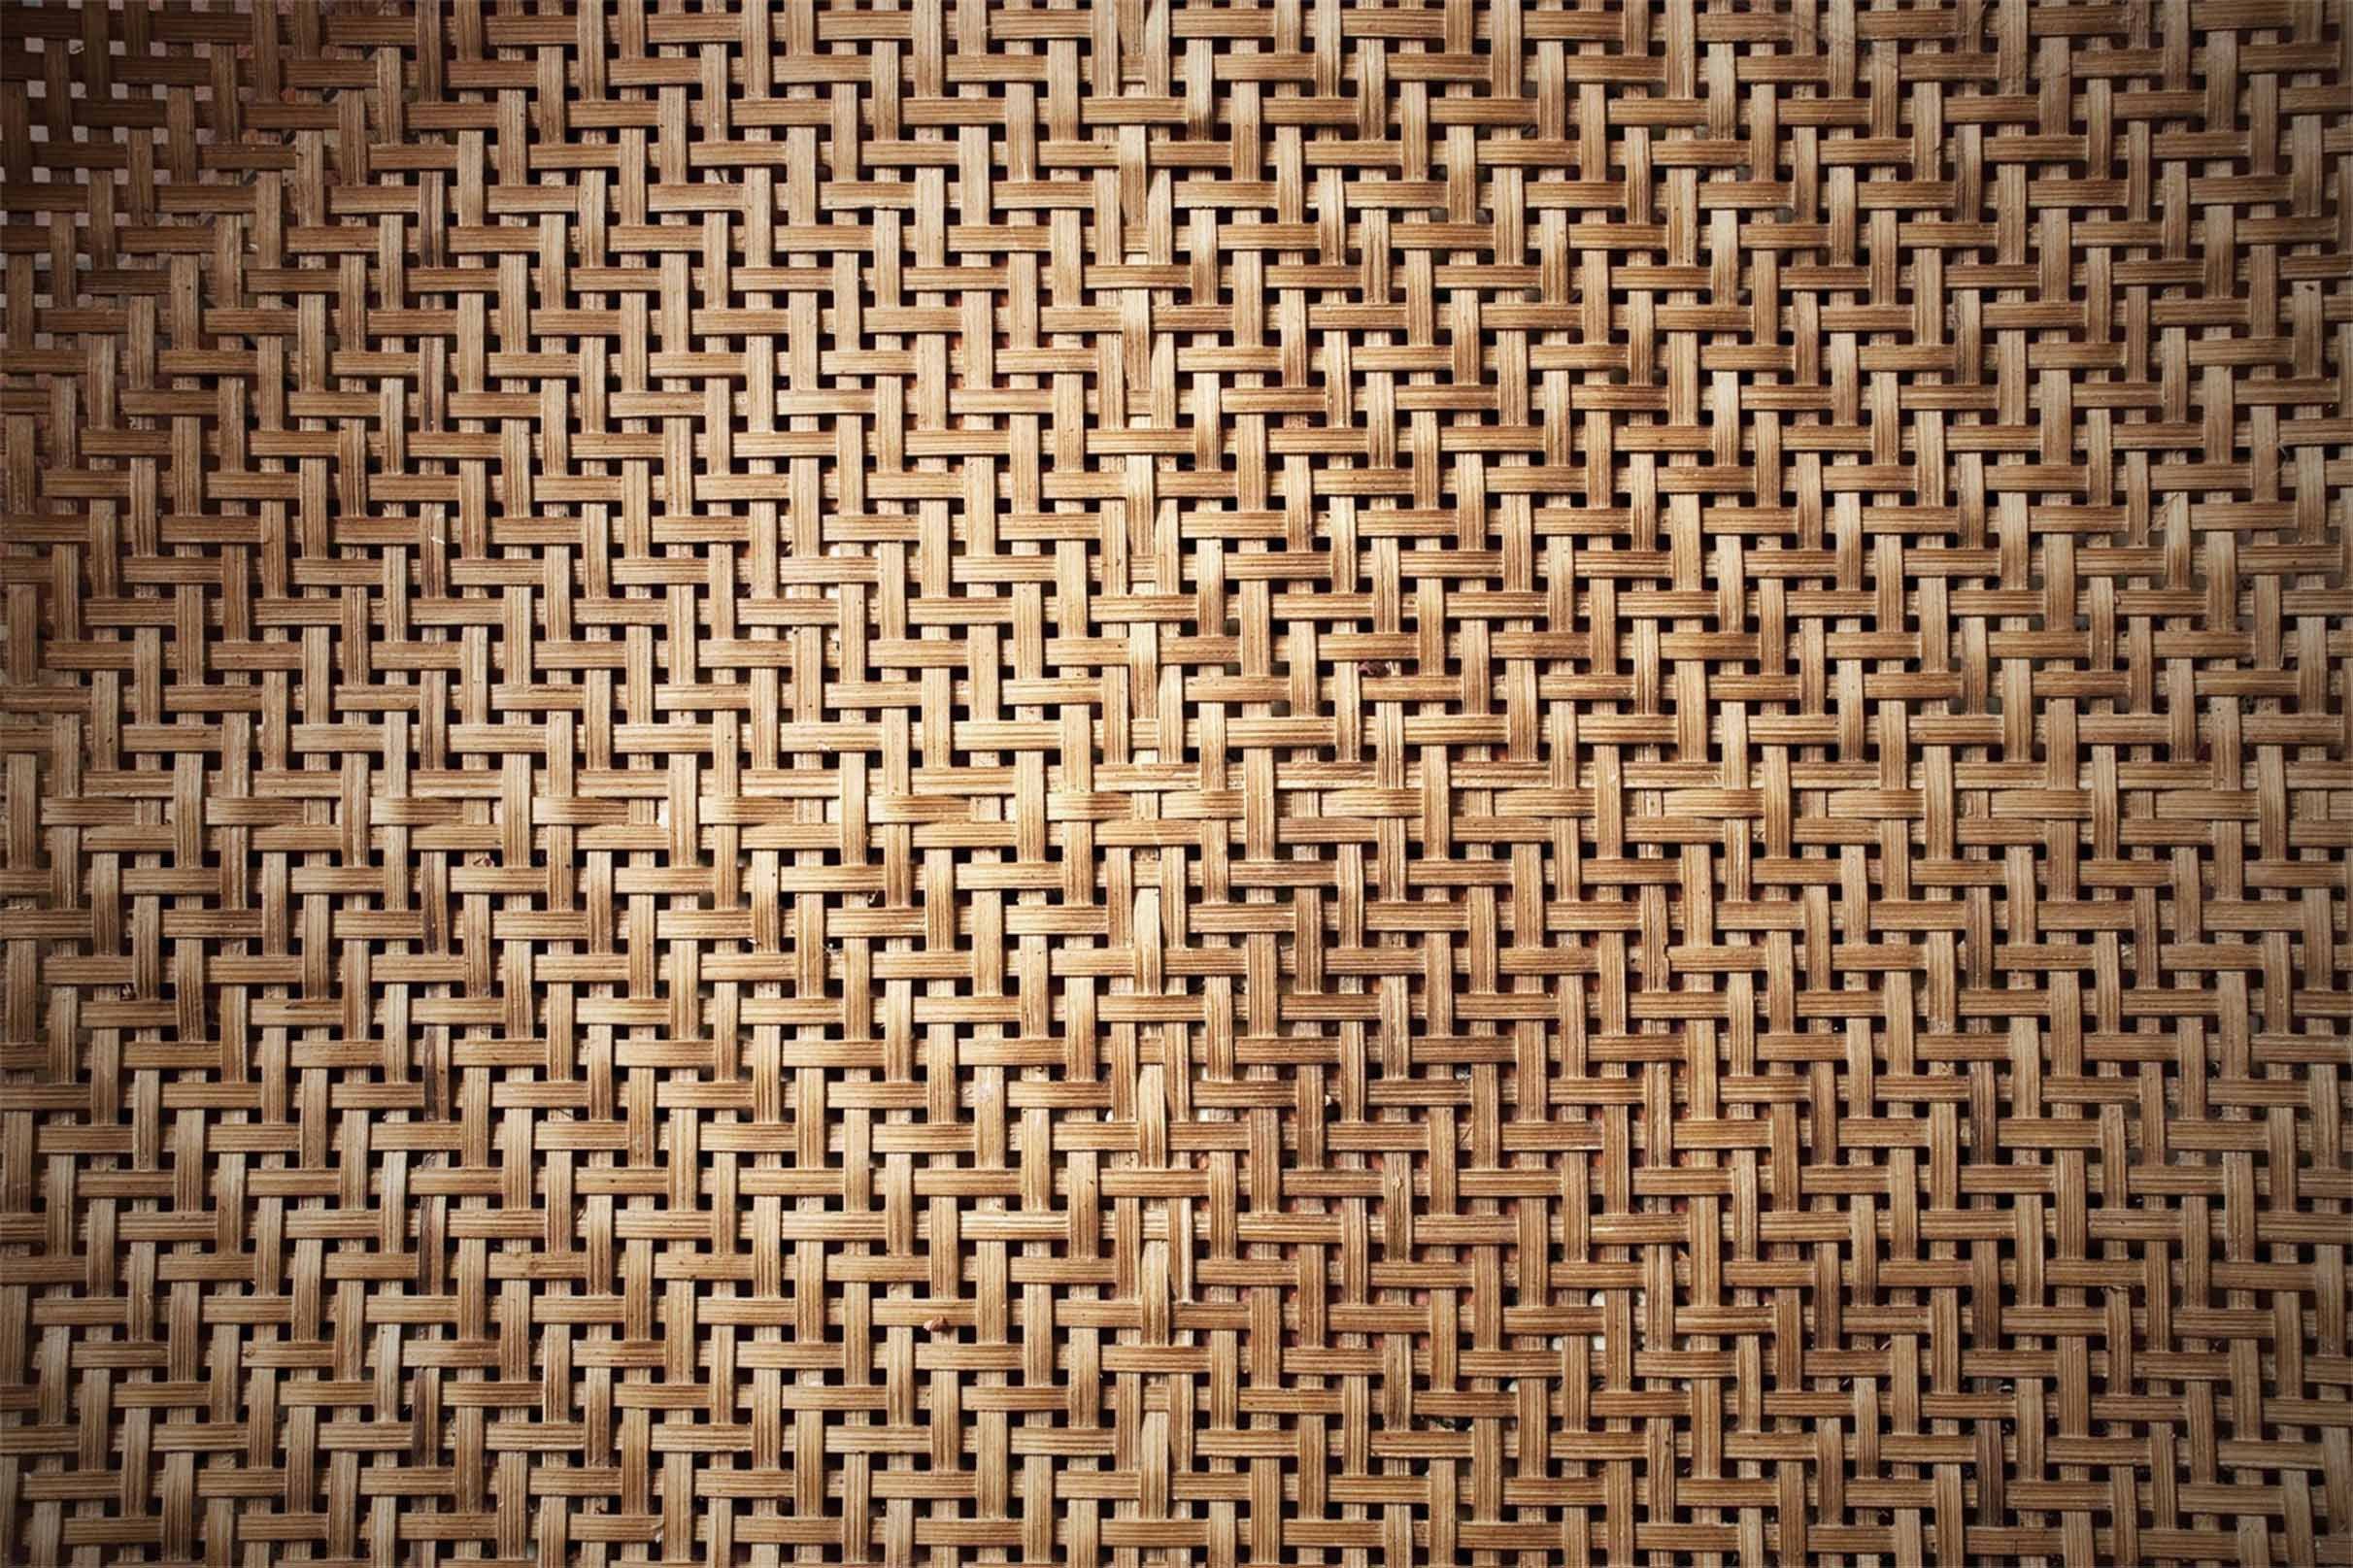 3D Vintage Bamboo Weave Kitchen Mat Floor Mural Wallpaper AJ Wallpaper 